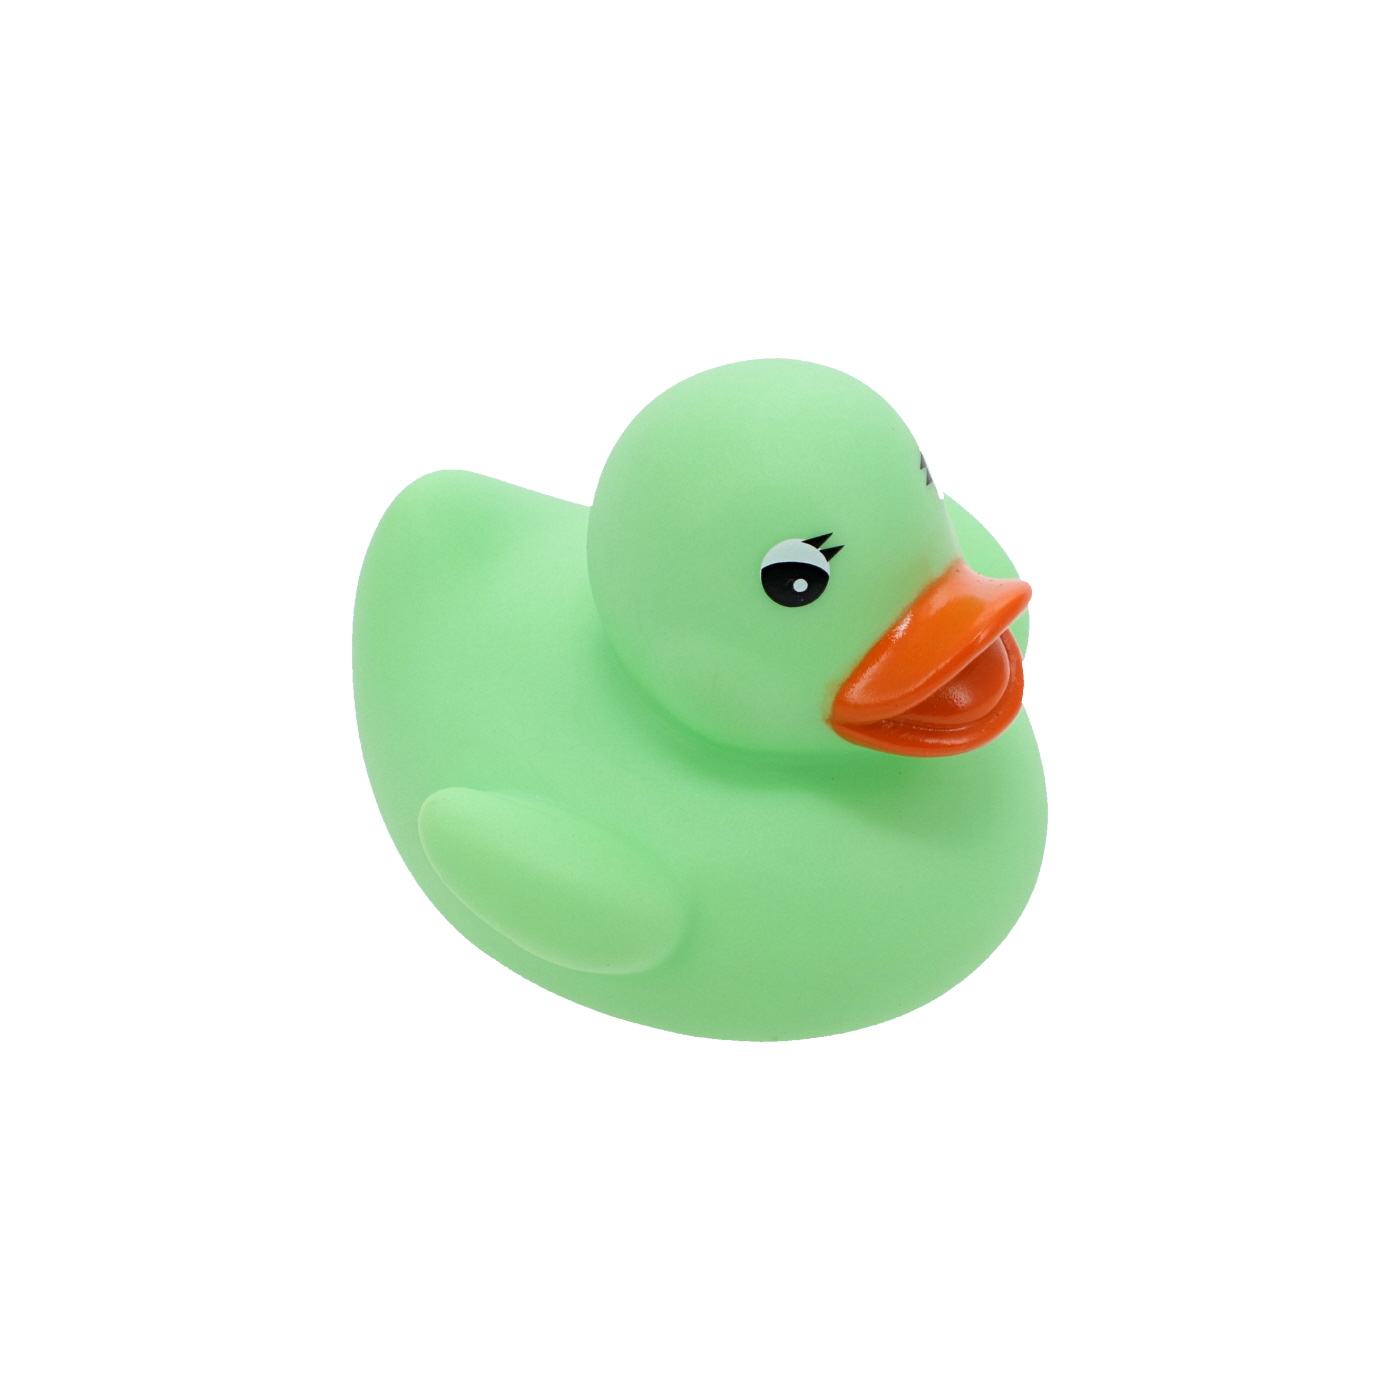 Classic green rubber ducky (6 cm)